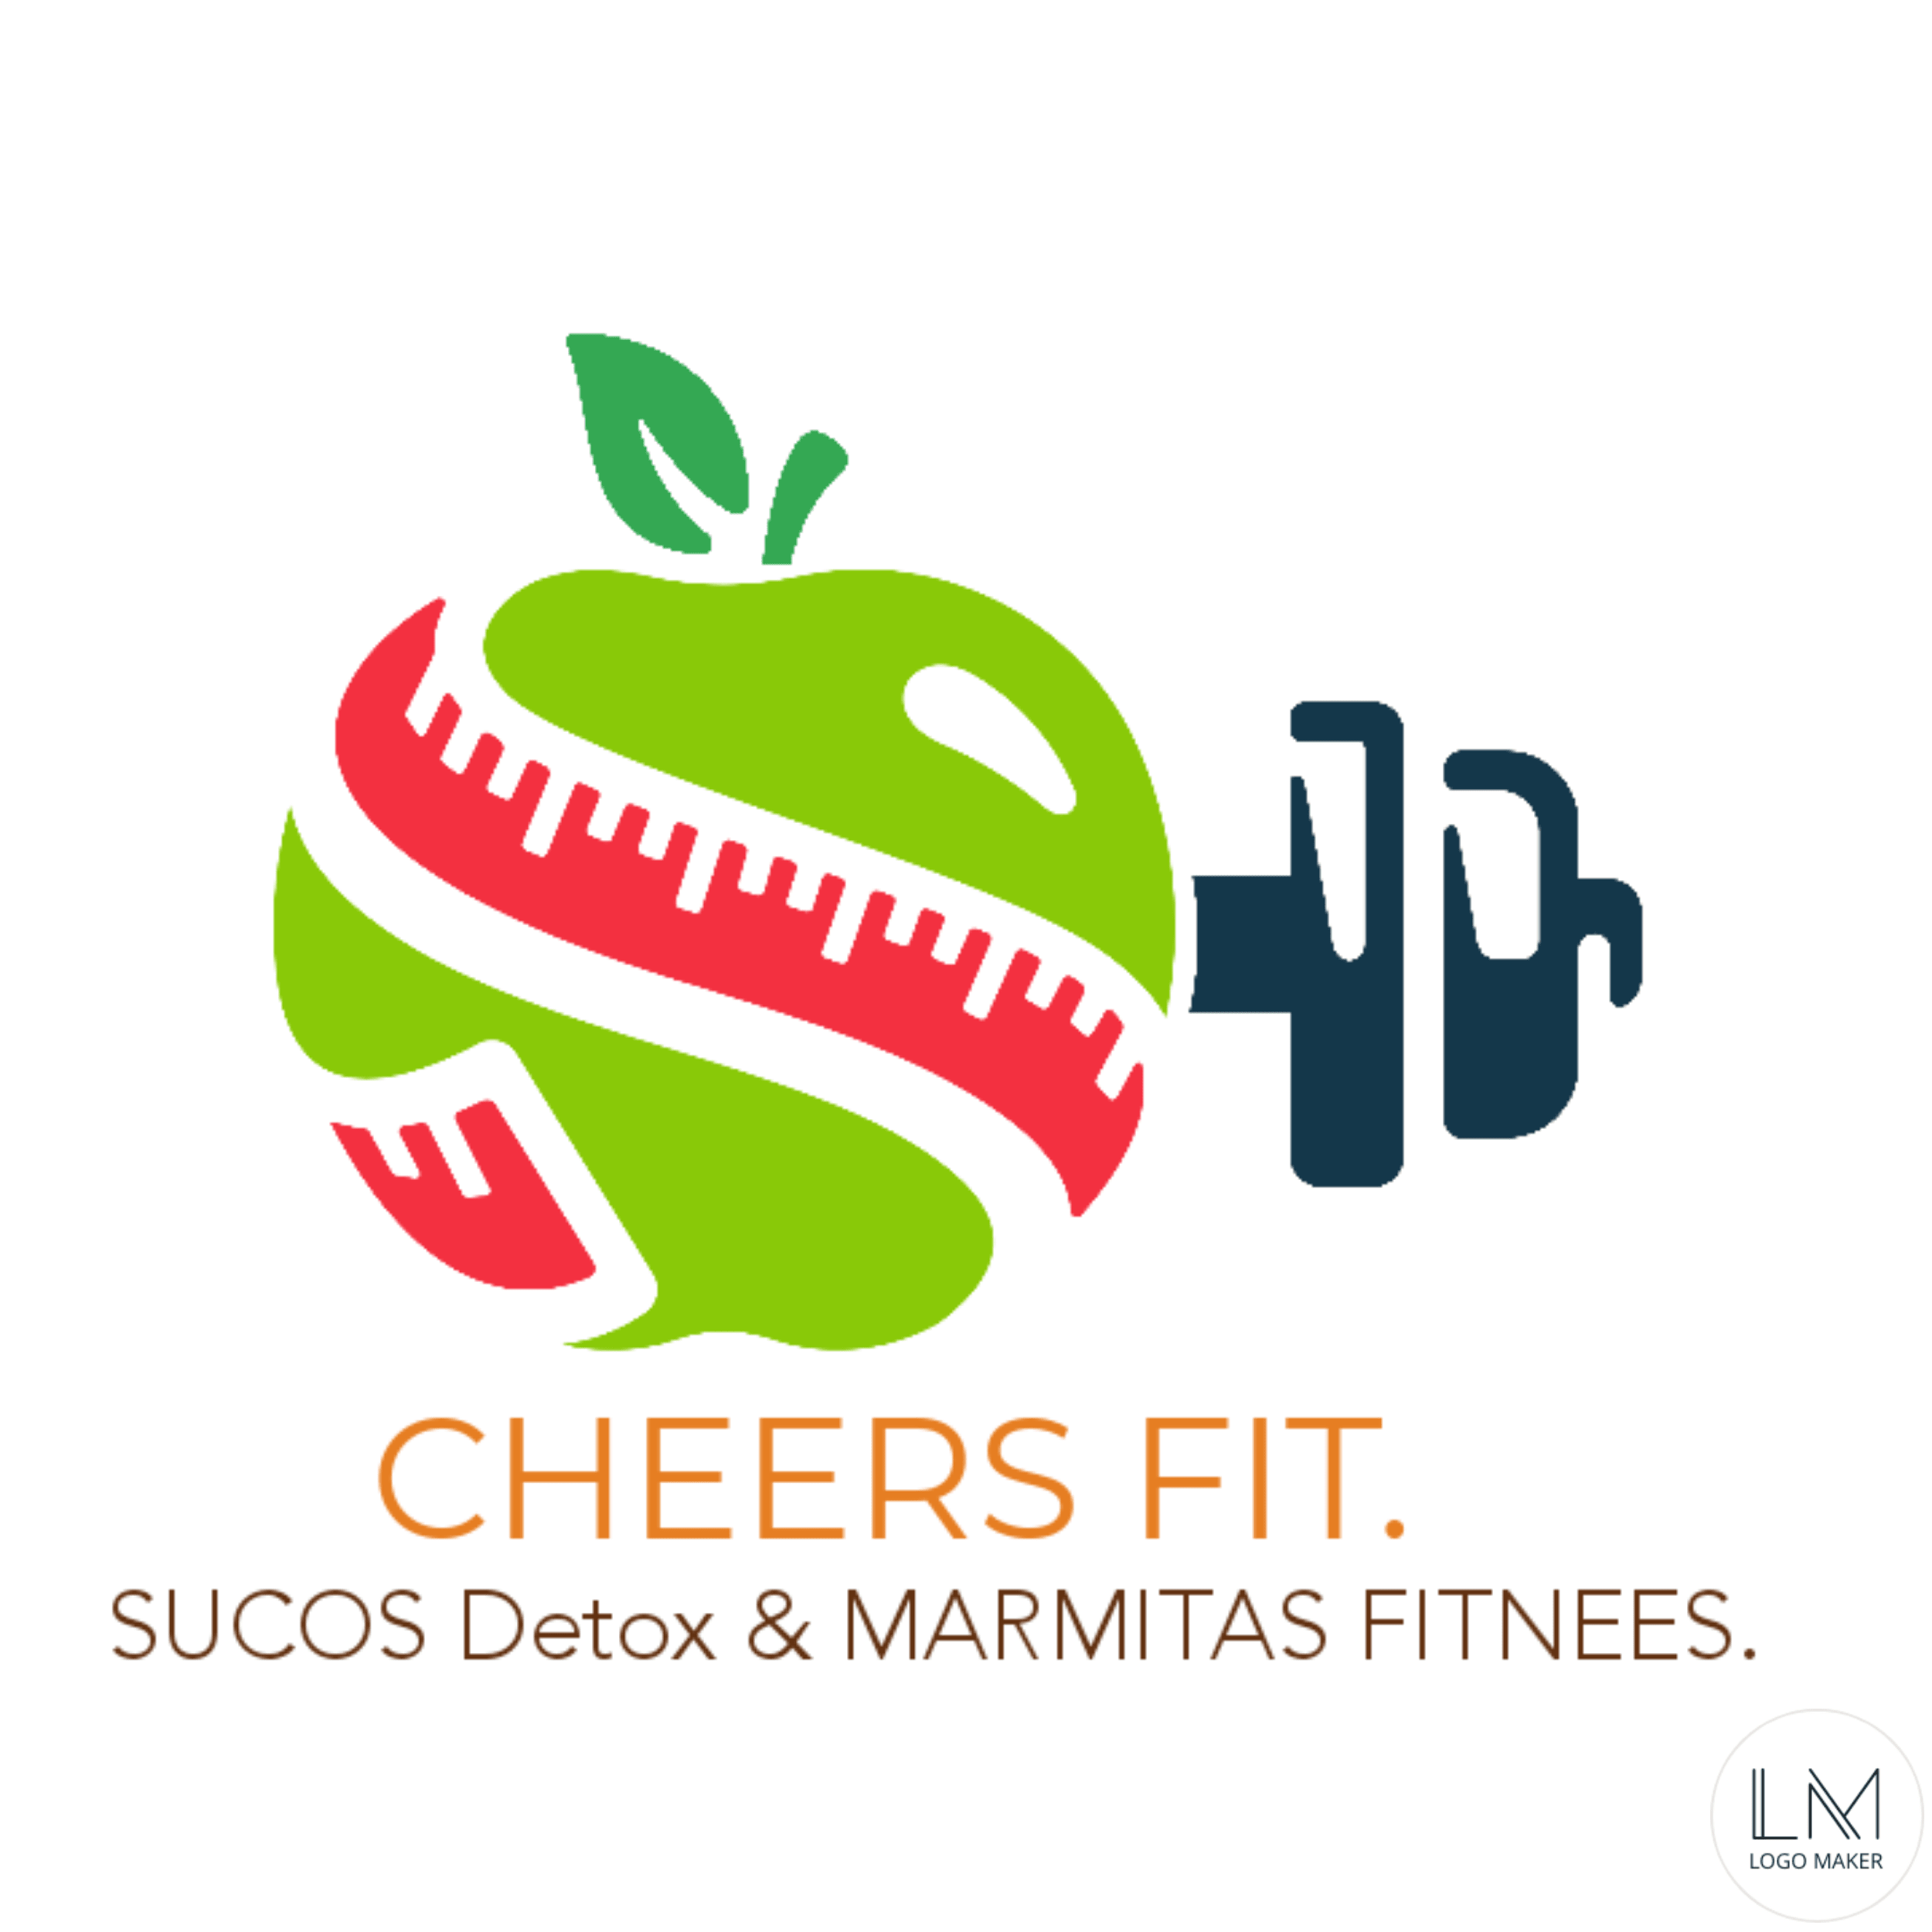 Cheers Fit Sucos Detox & Marmitas Fitness.